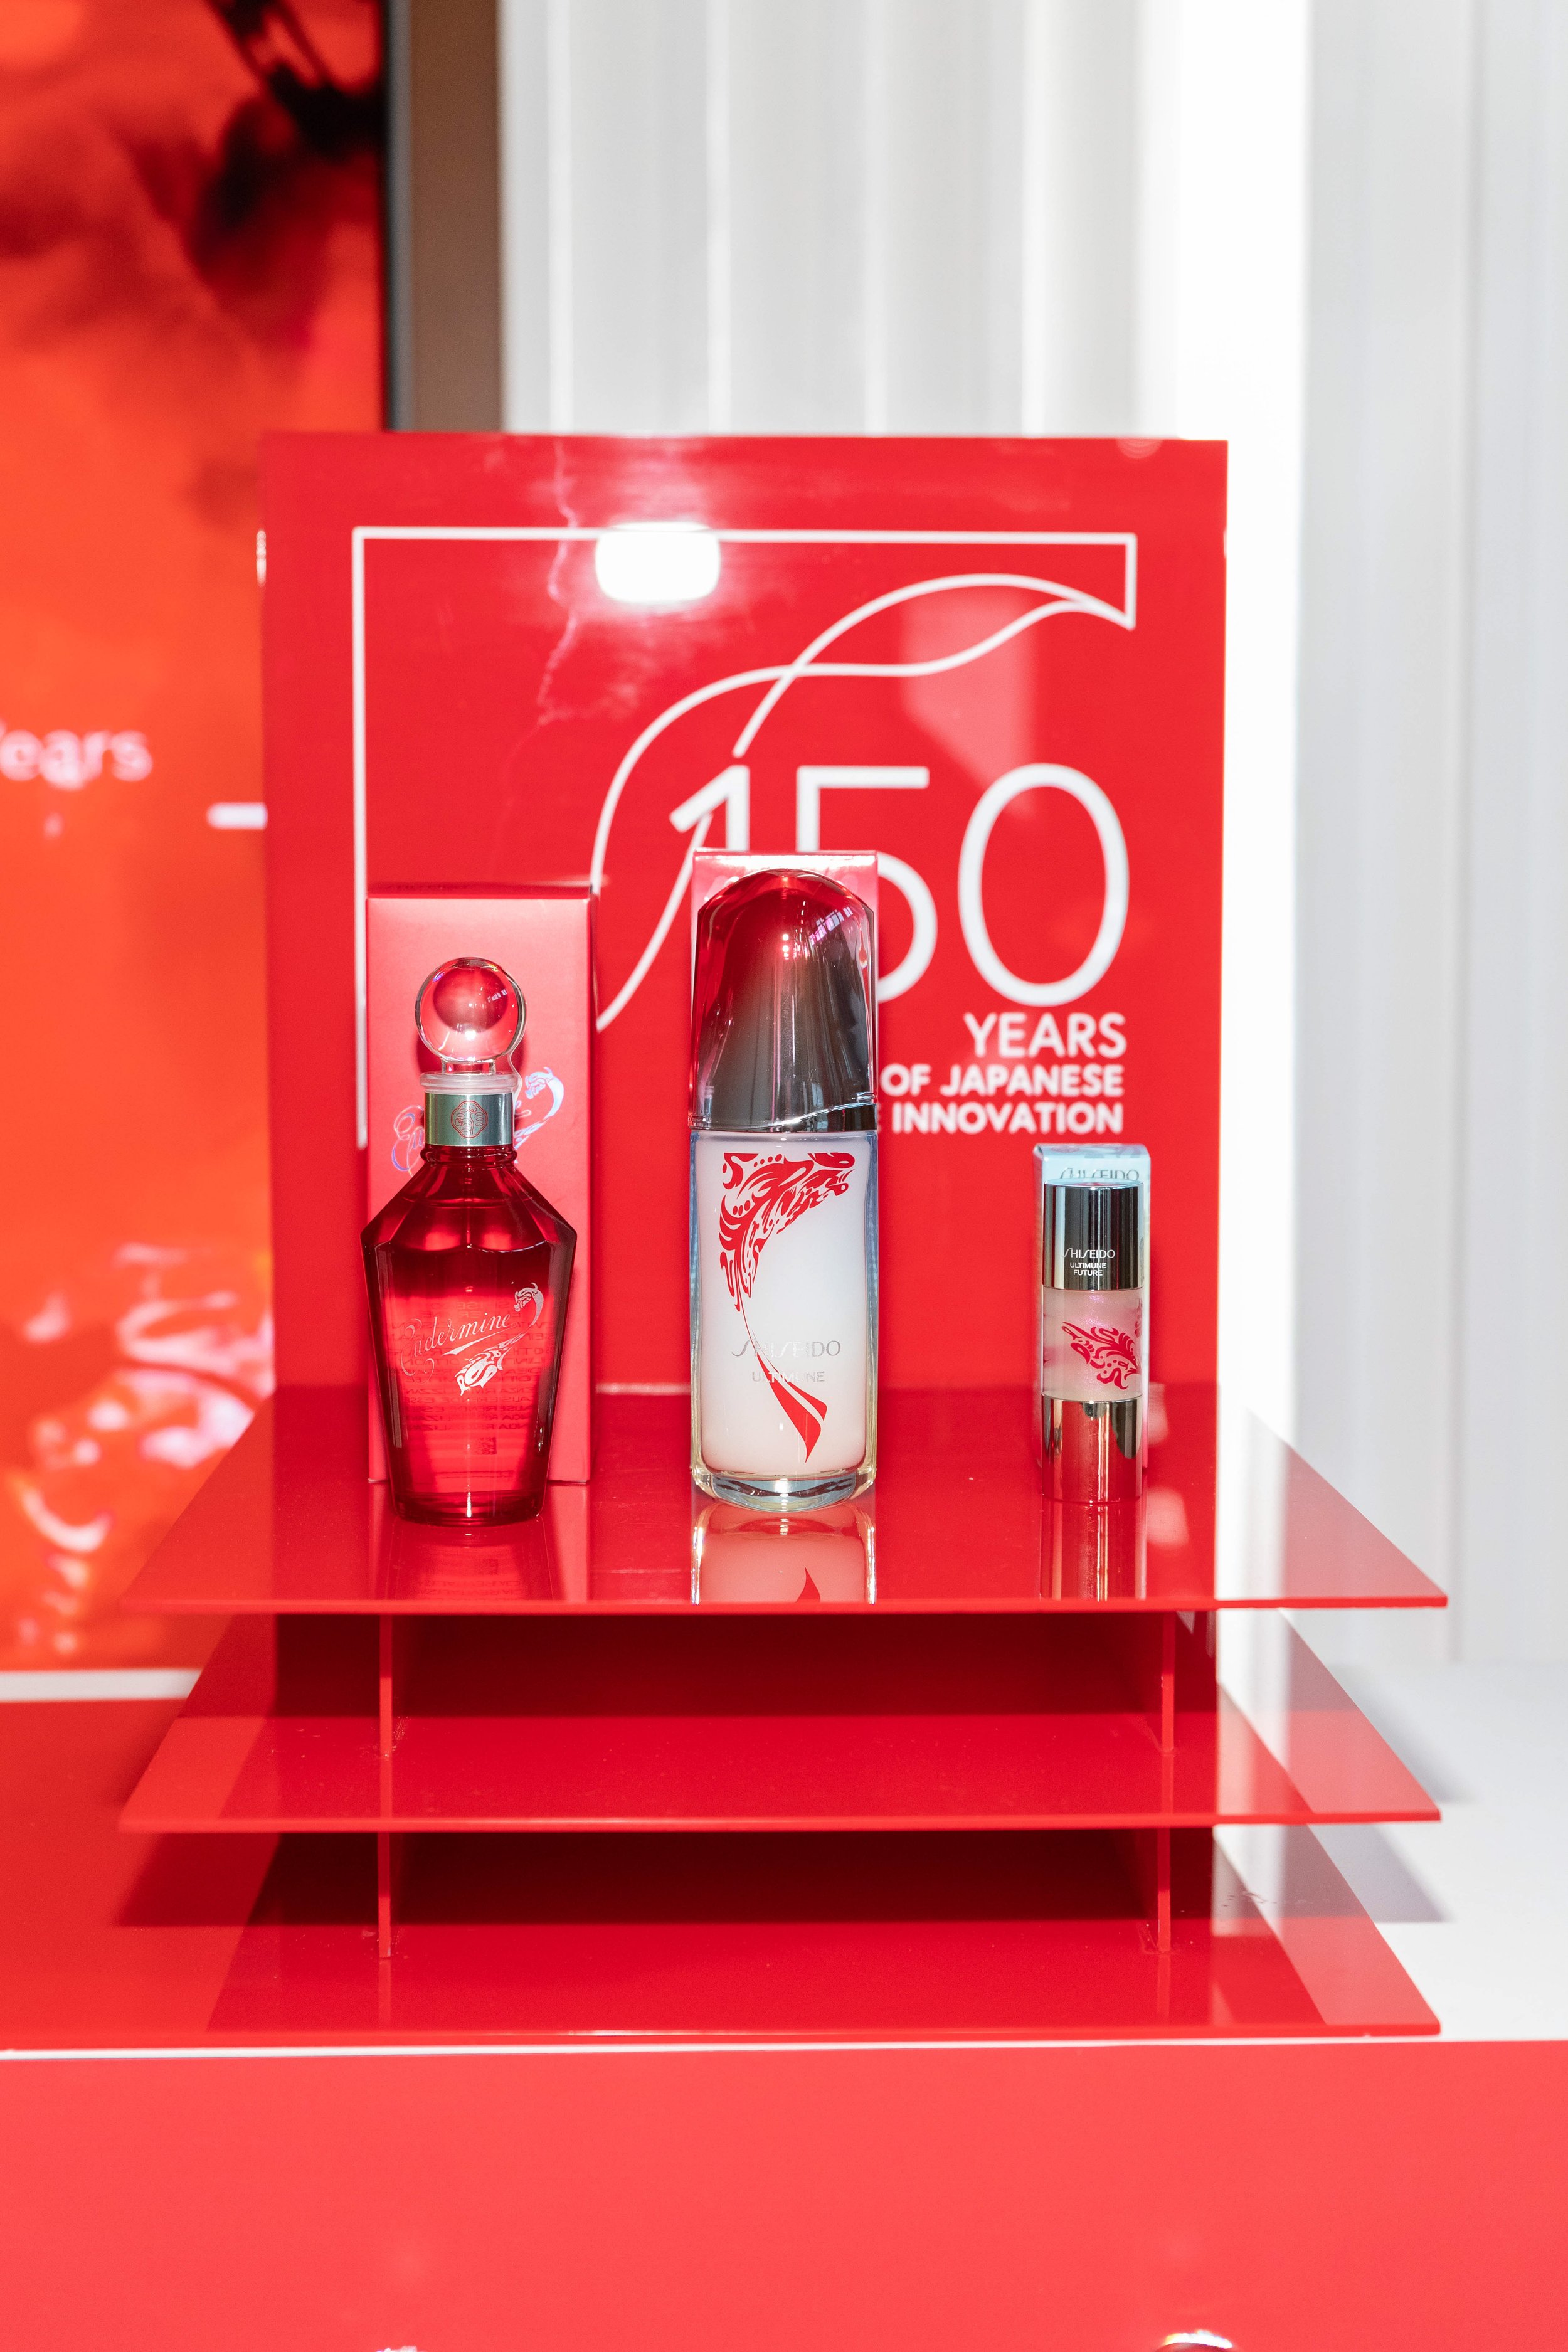 Shiseido-AGO-150th-Anniversary-Installation-Brand-Partnerships-Sponsorships-3-Product-Display-Toronto.jpg